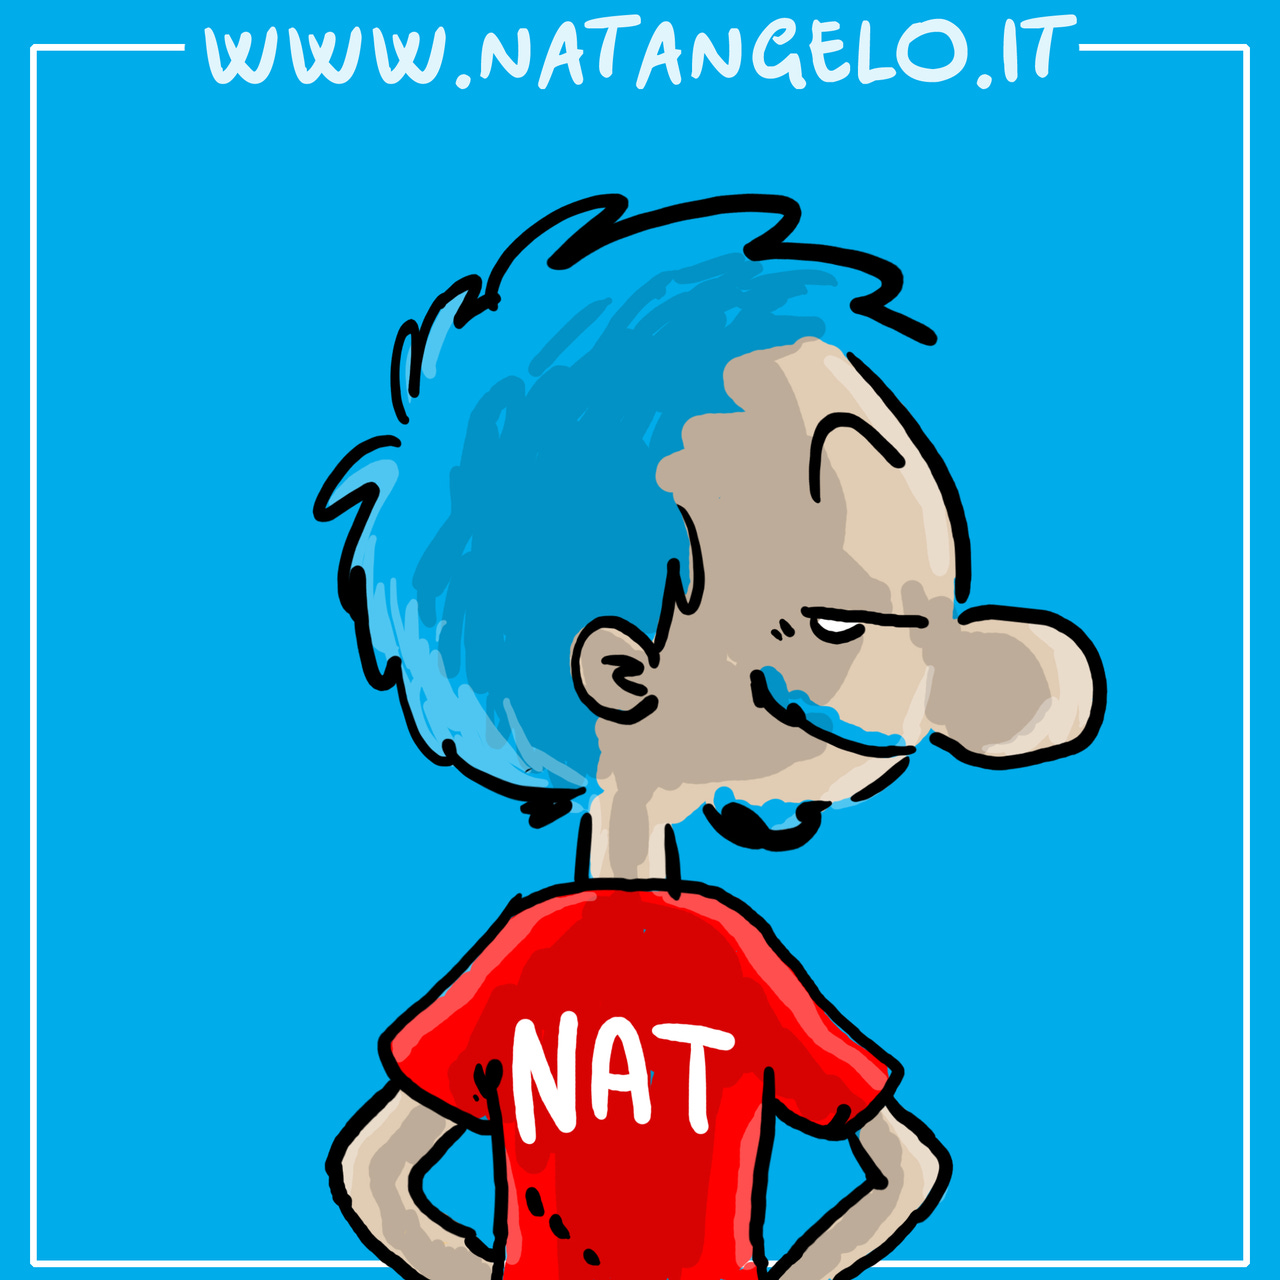 Natangelo